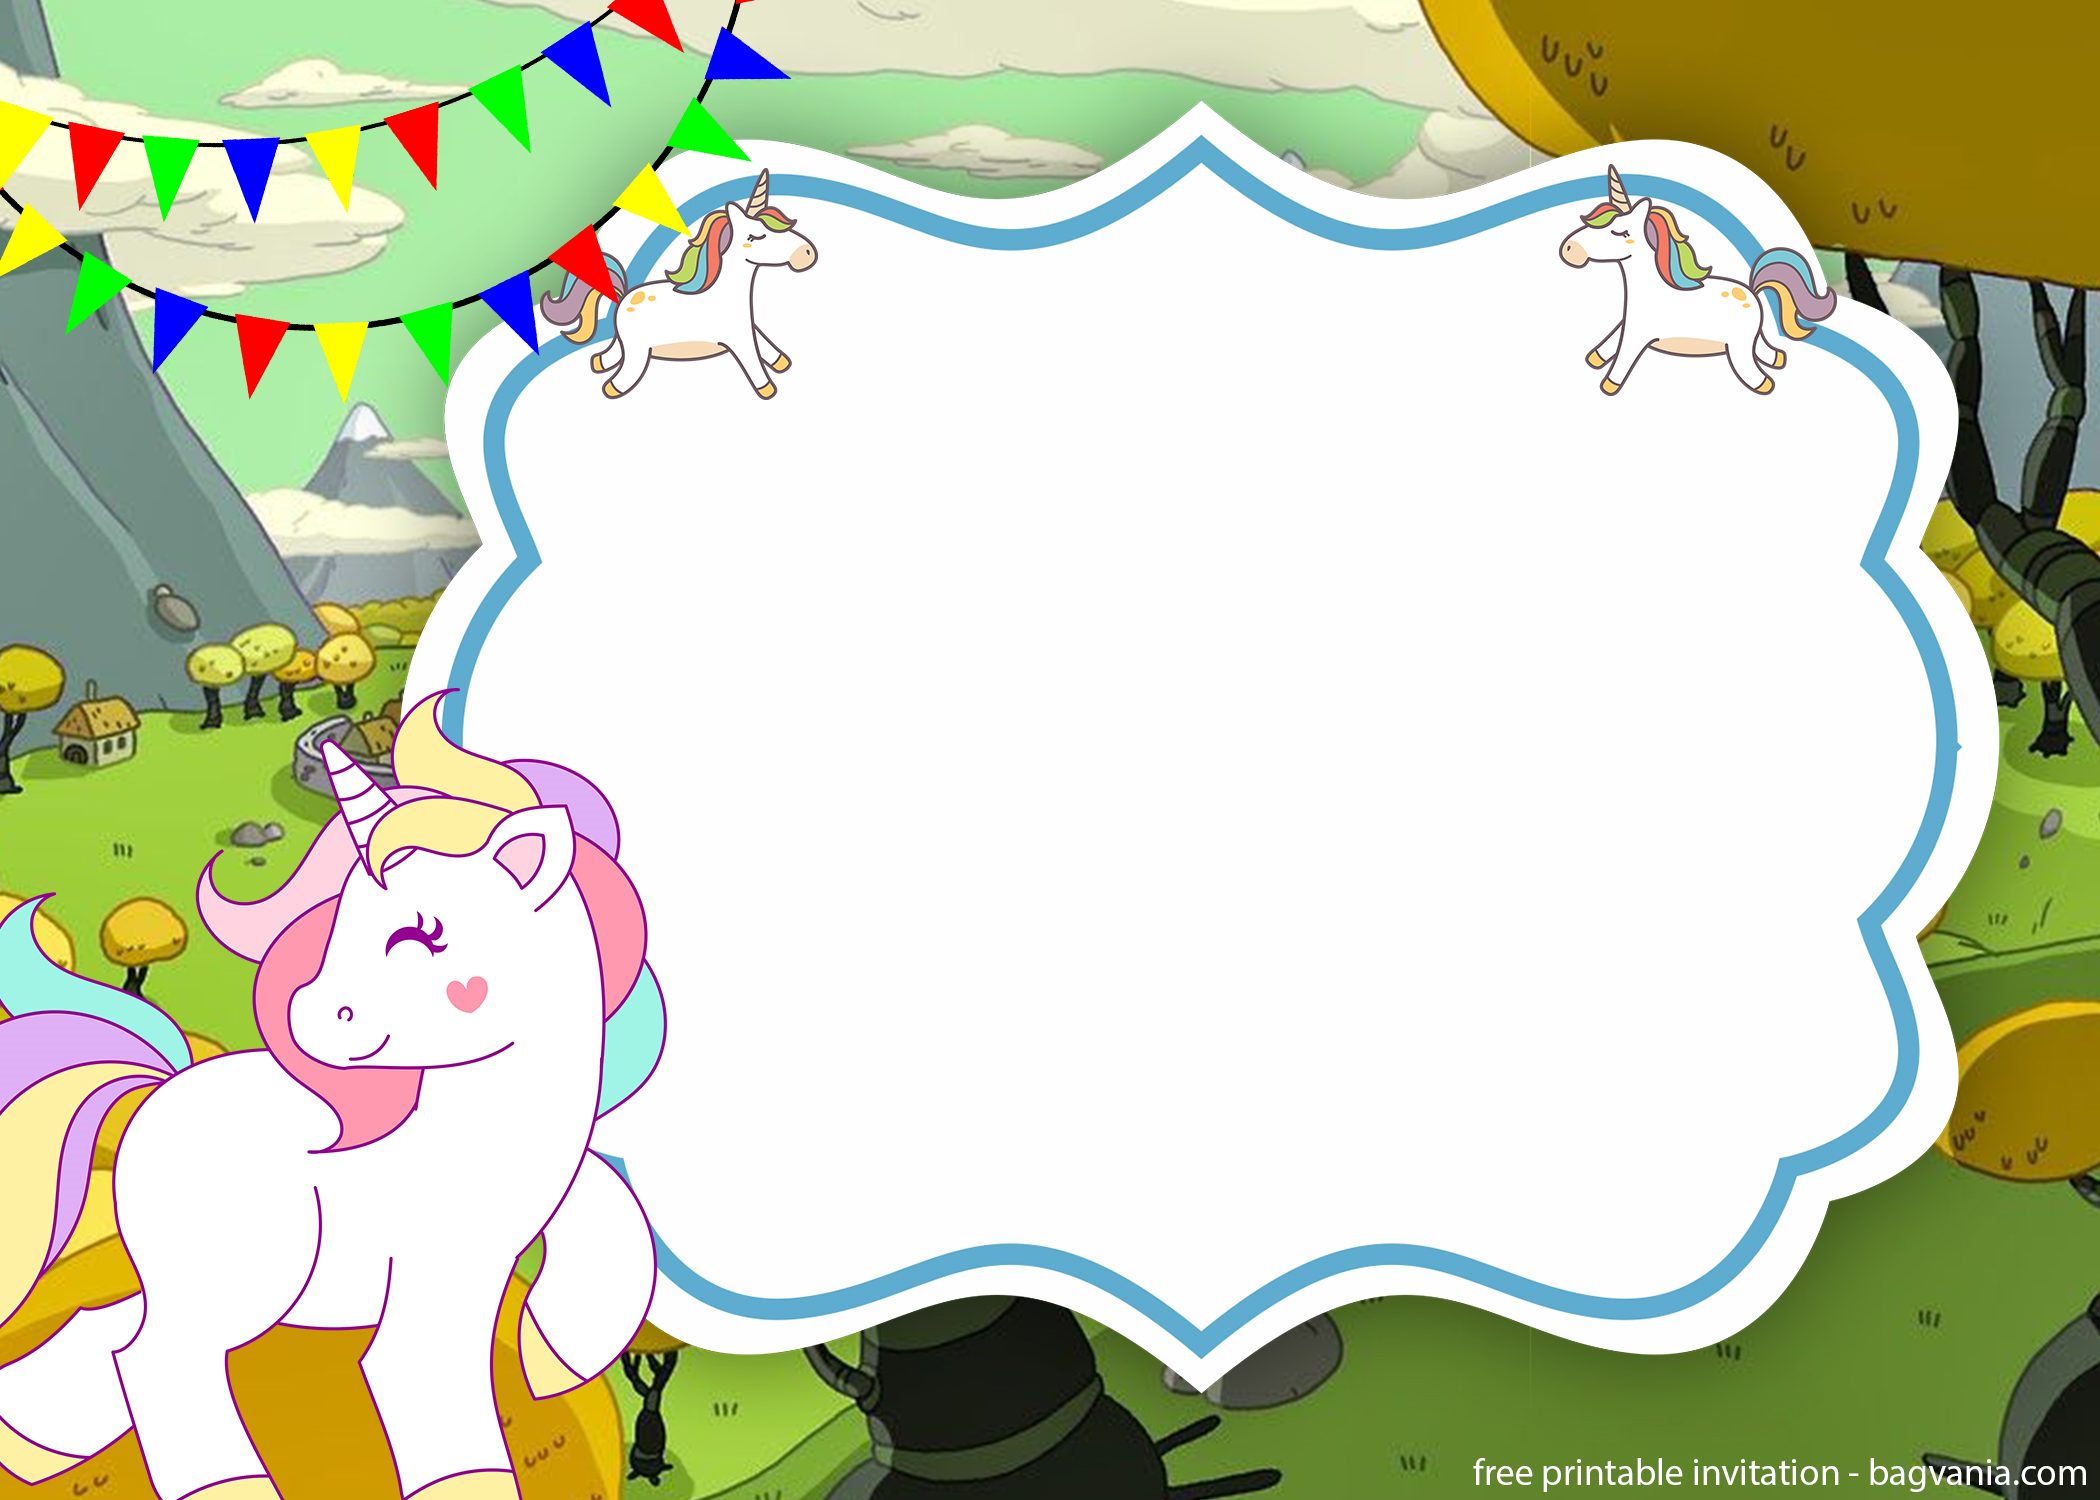 unicorn-birthday-party-ideas-free-invitation-download-printable